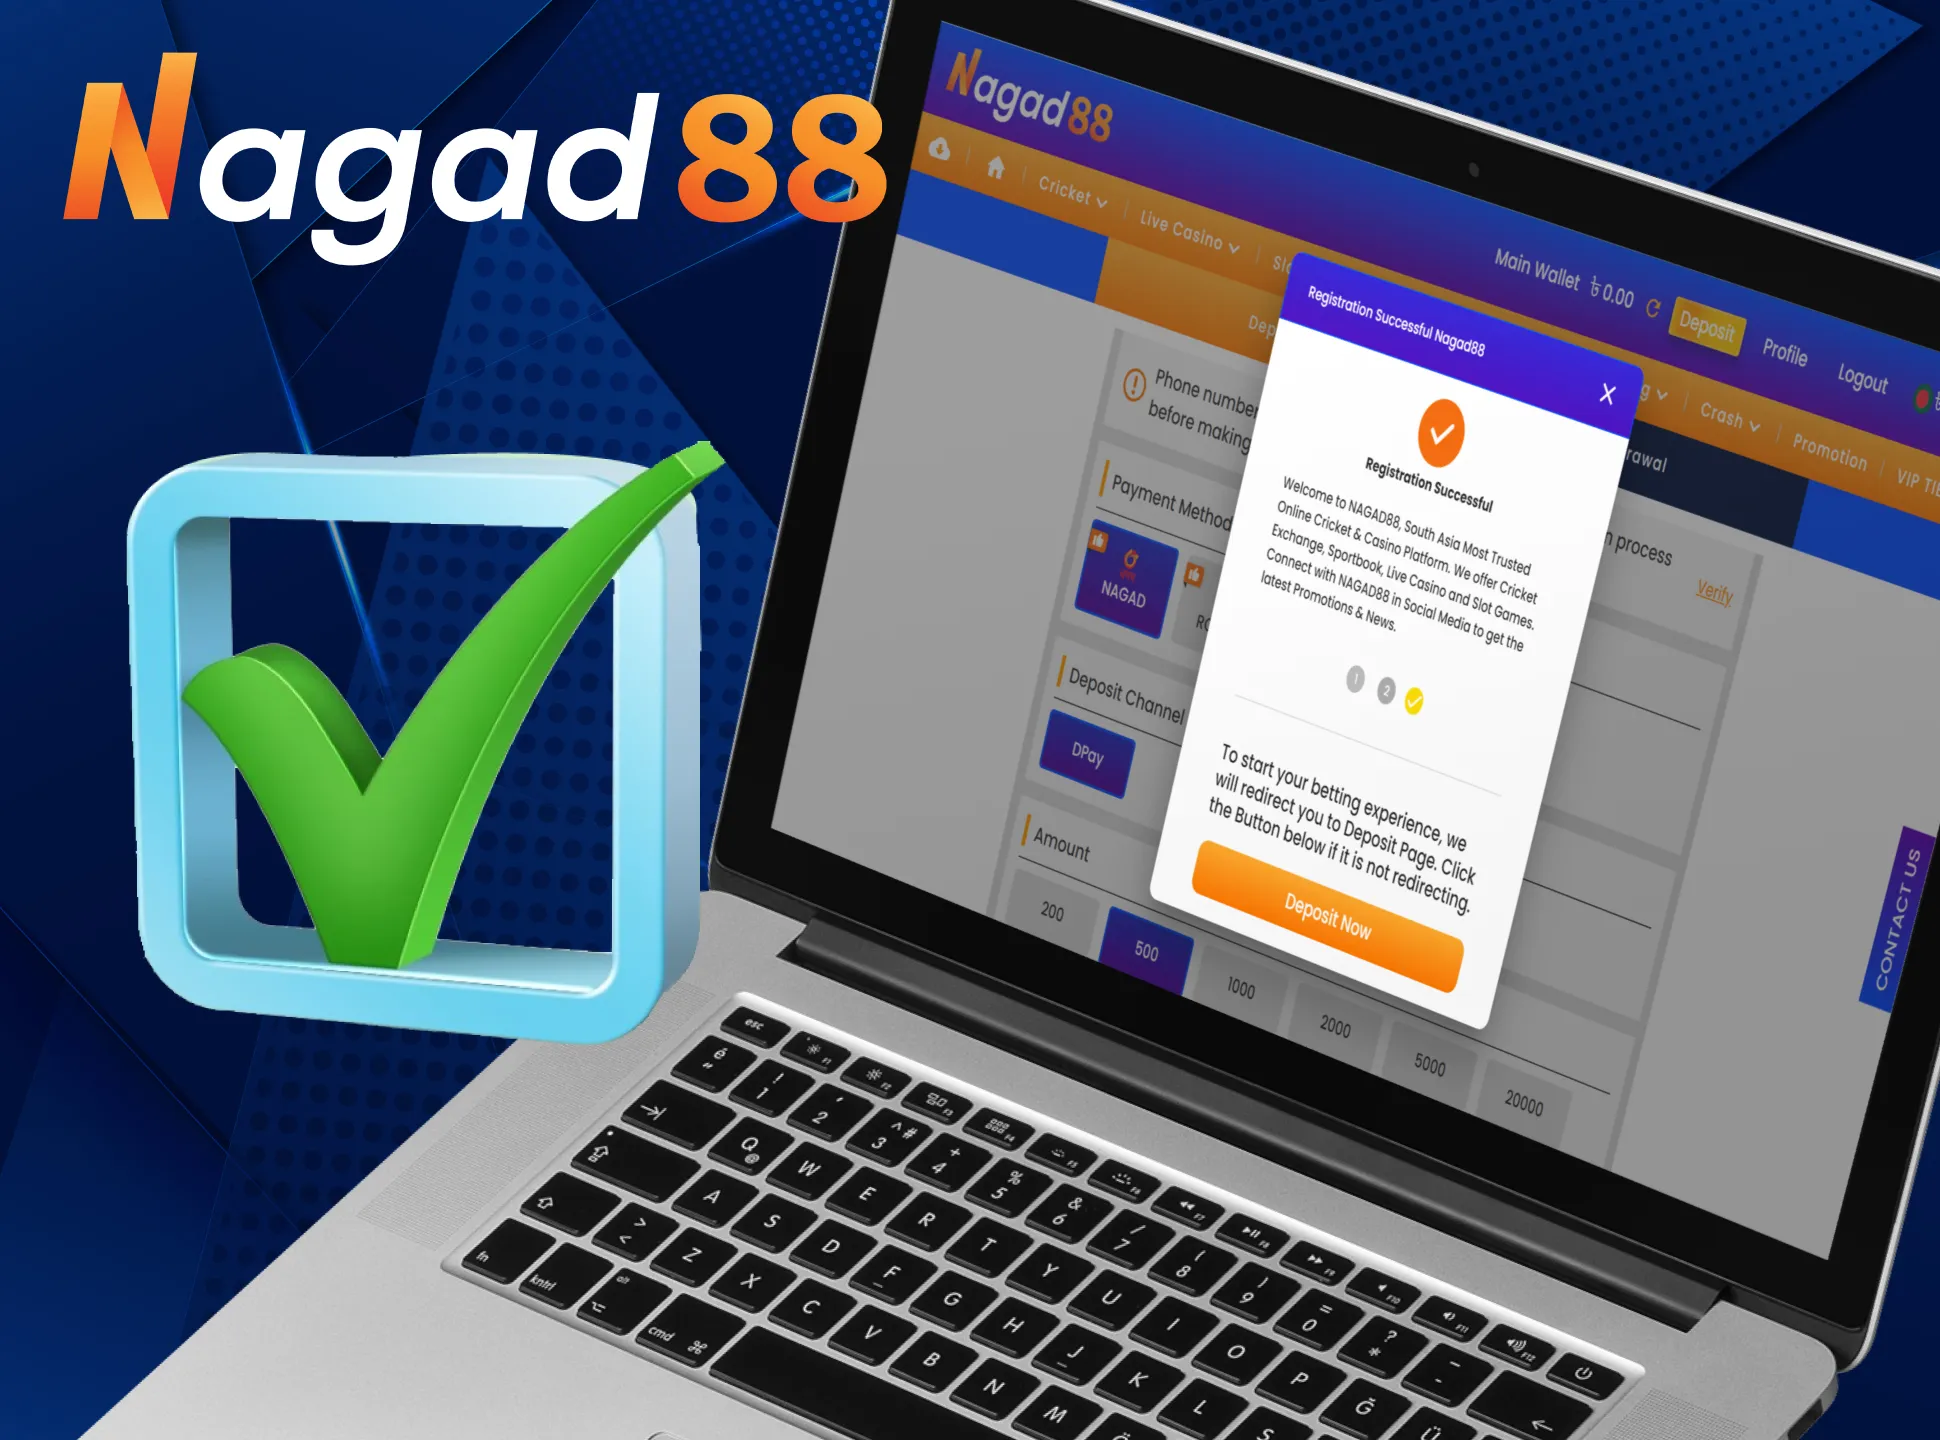 Complete the simple Nagad88 registration.